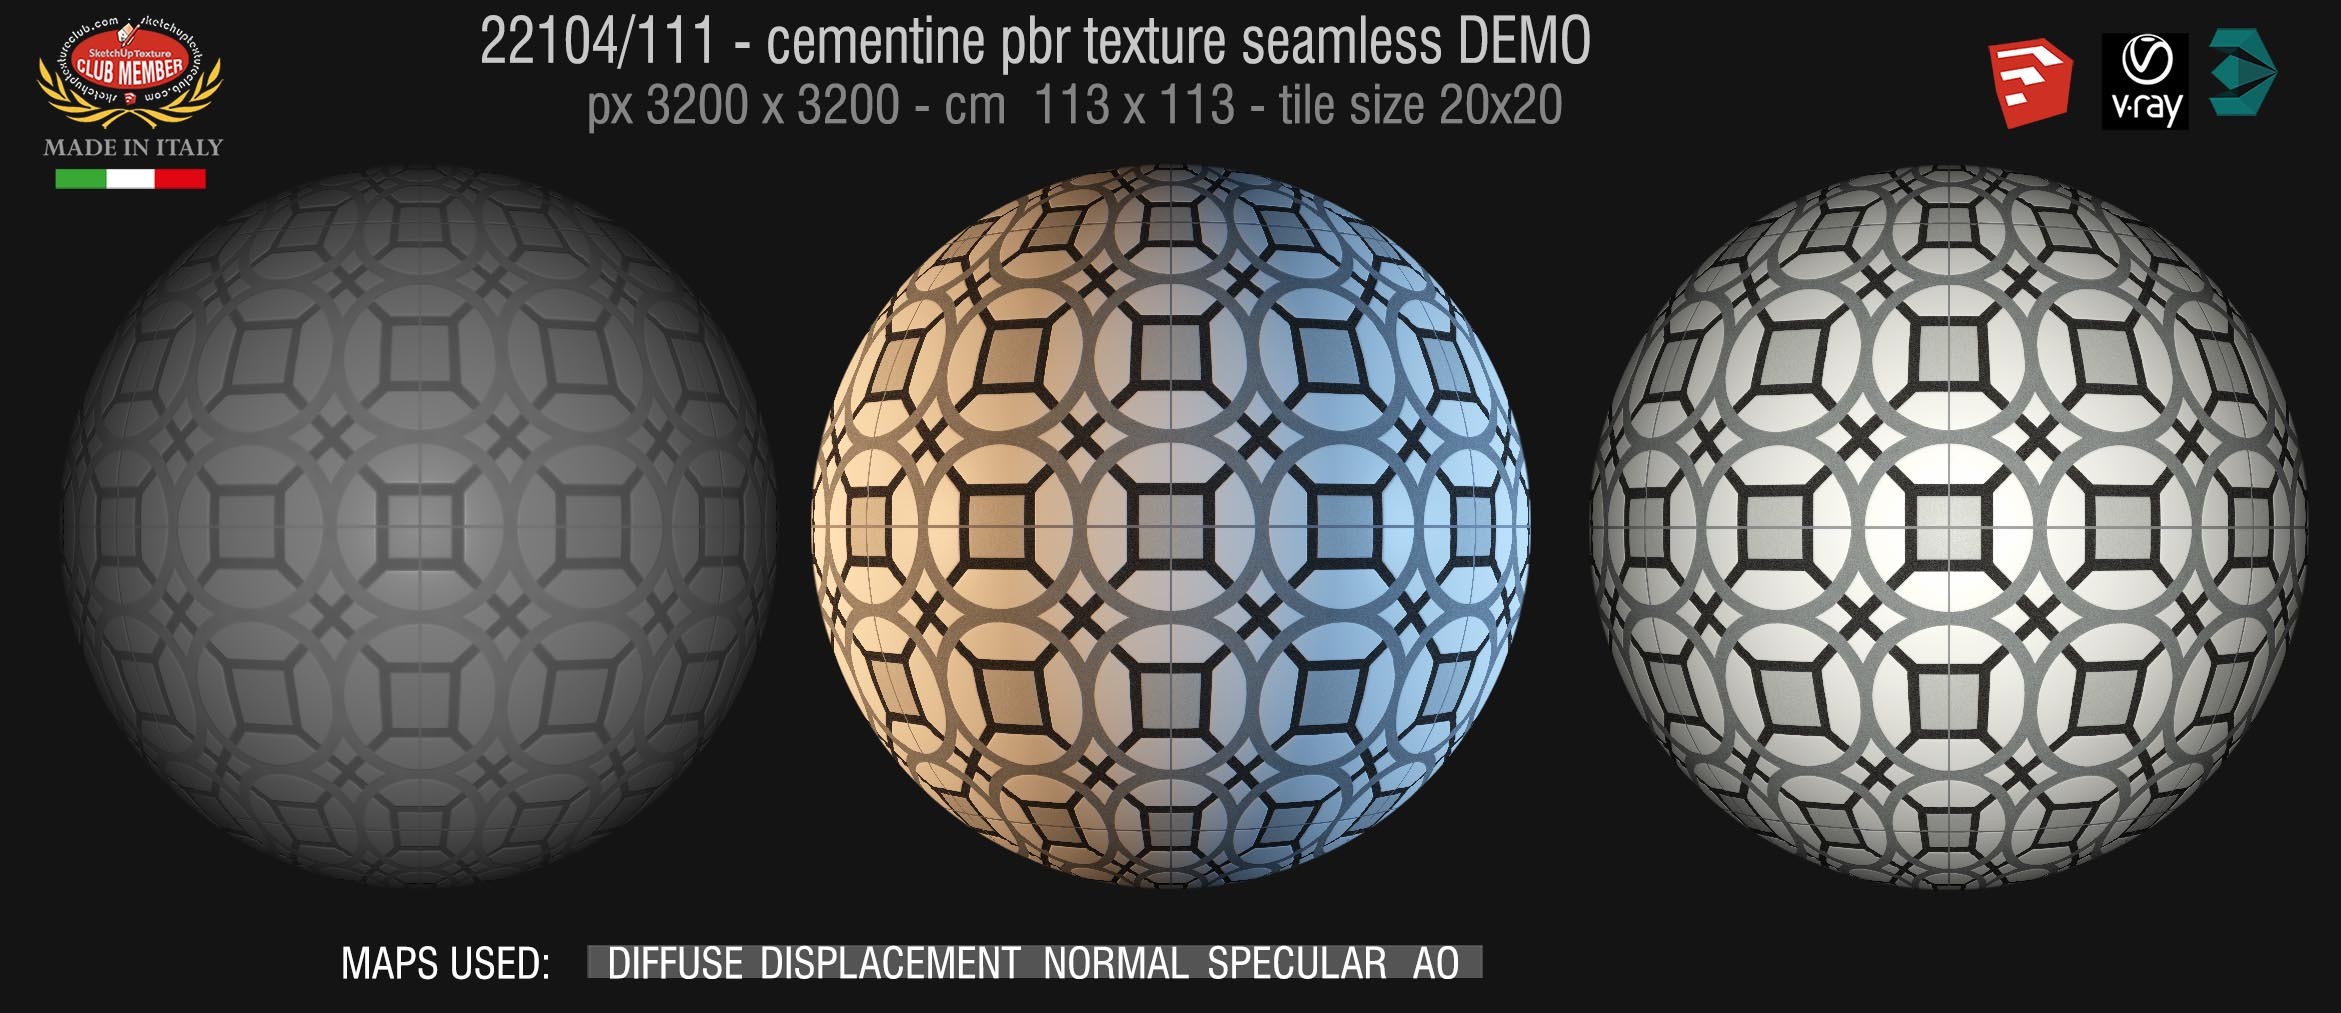 22104/111 cementine tiles Pbr texture seamless DEMO  - D_Segni Concrete Look by Marazzi